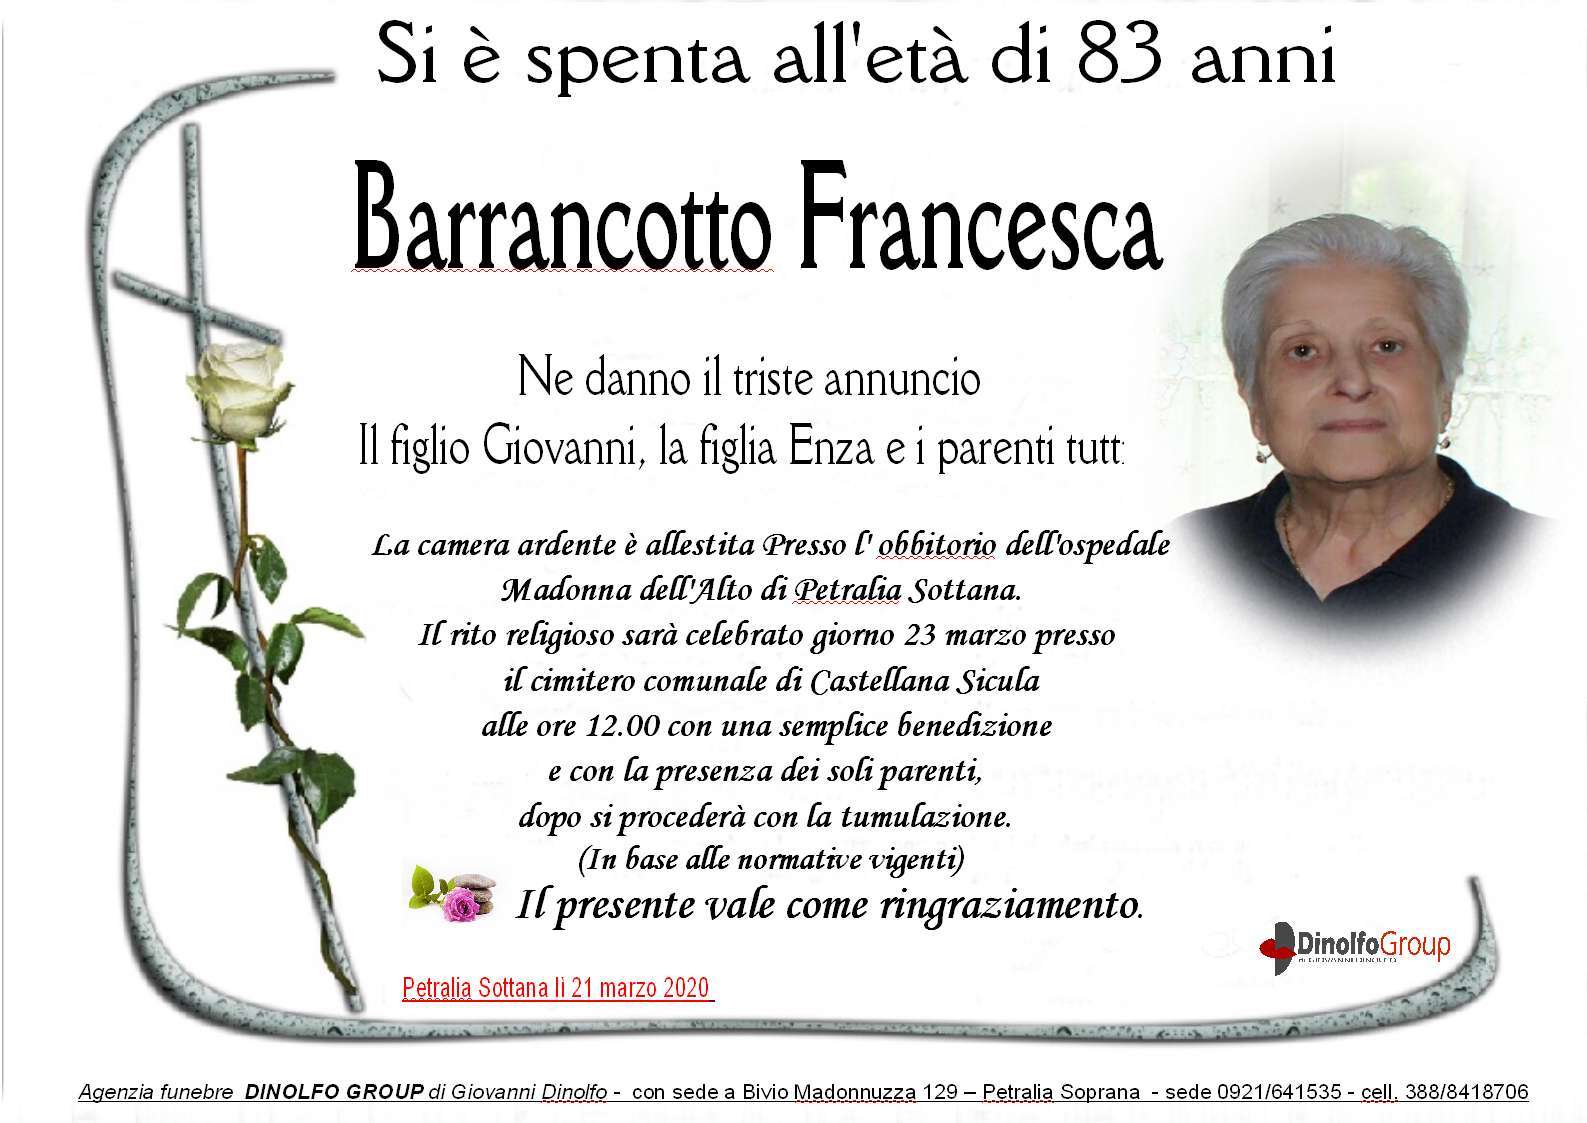 Francesca Barrancotto